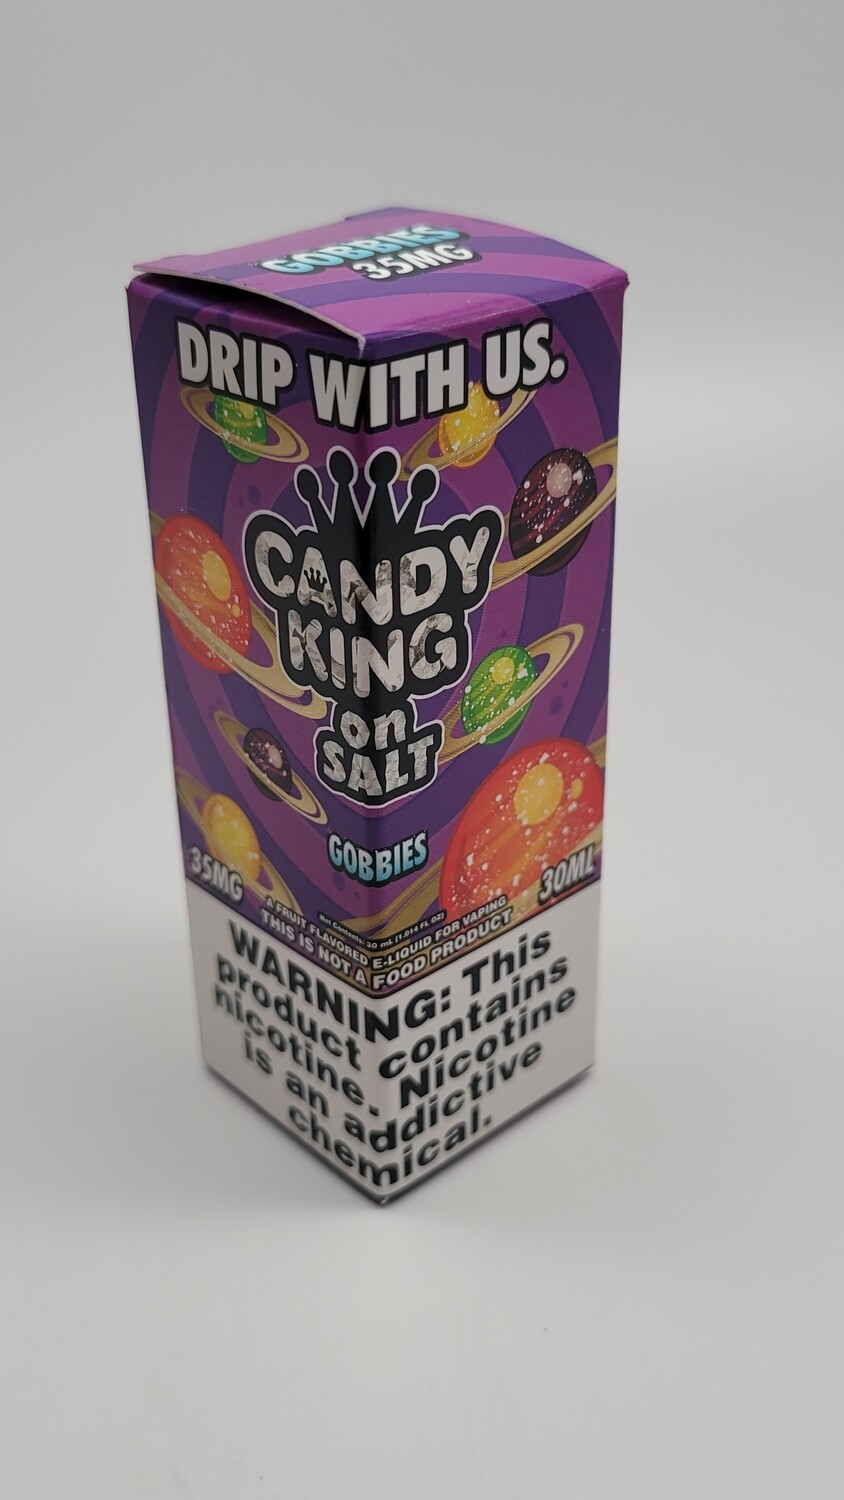 Candy King on Salt Gobbies